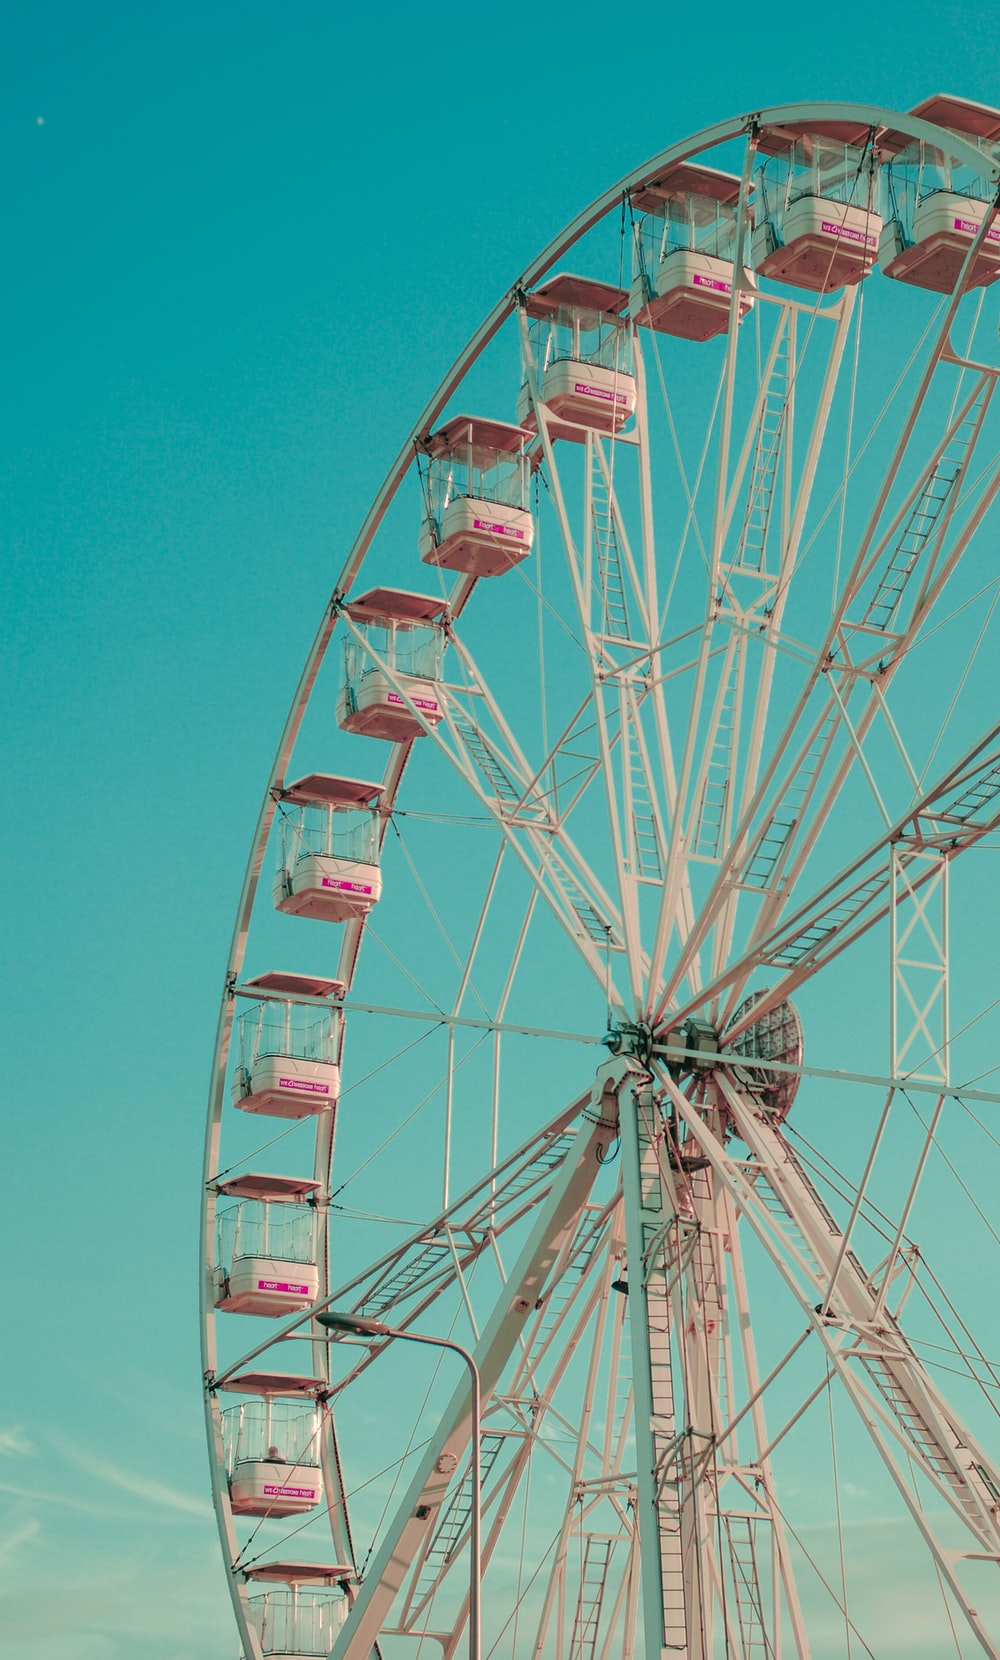 Ferris Wheel Pictures Image Stock Photos